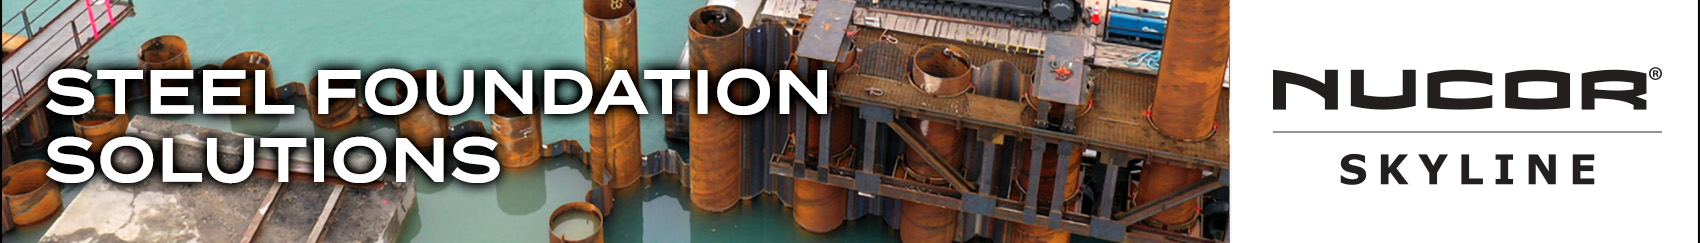 Nucor Skyline - Steel Foundation Solutions